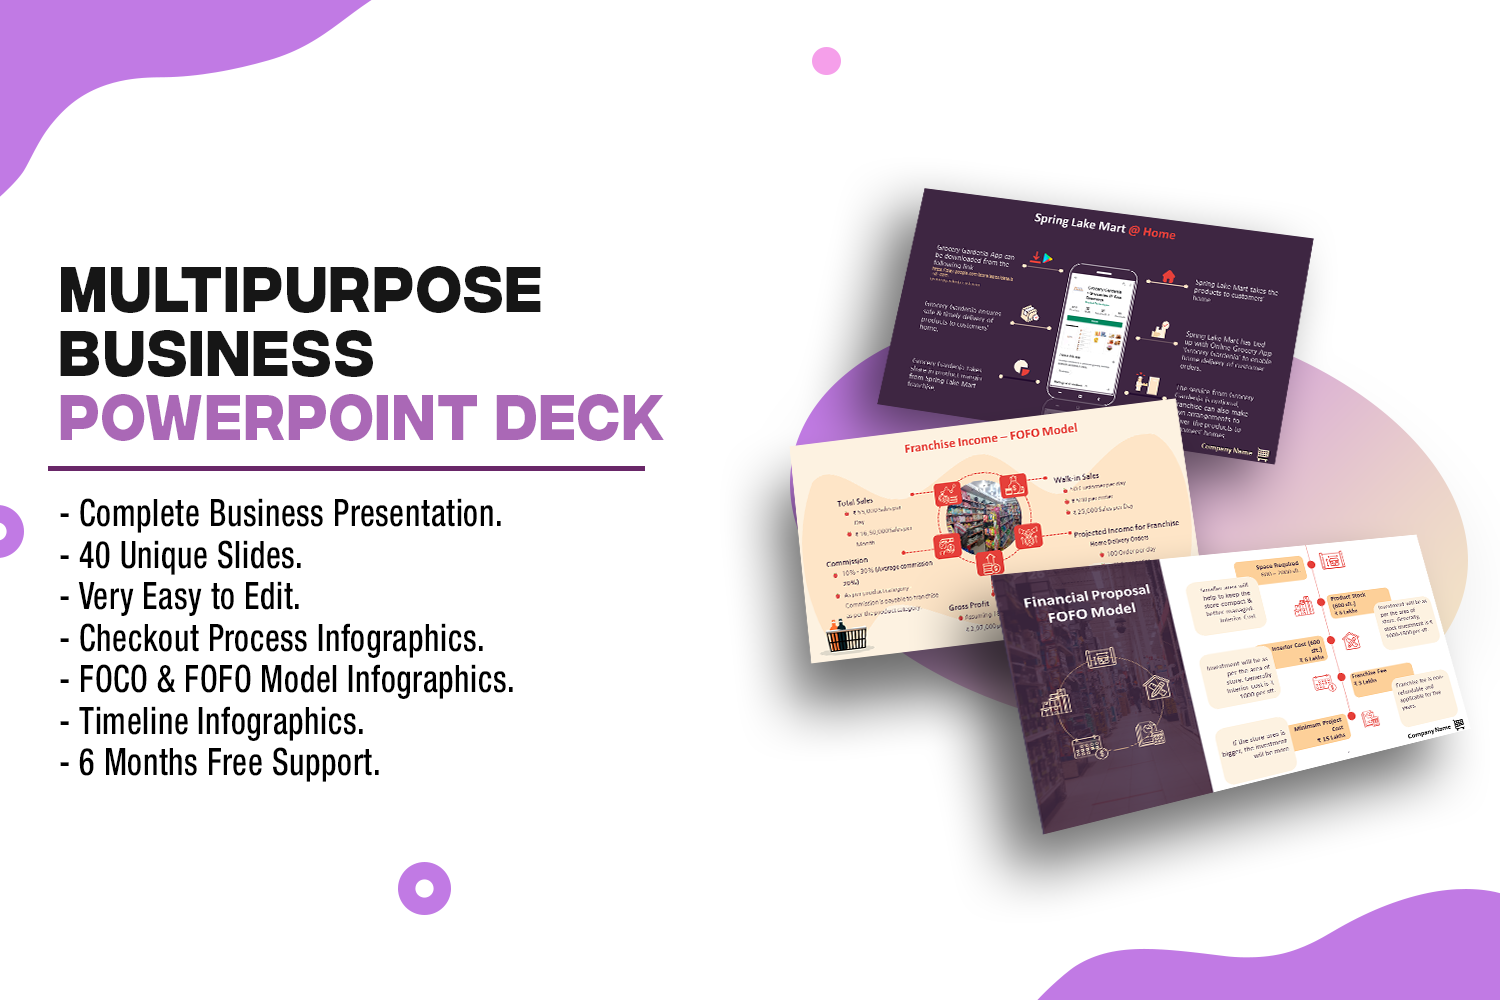 Multipurpose Business PowerPoint Deck